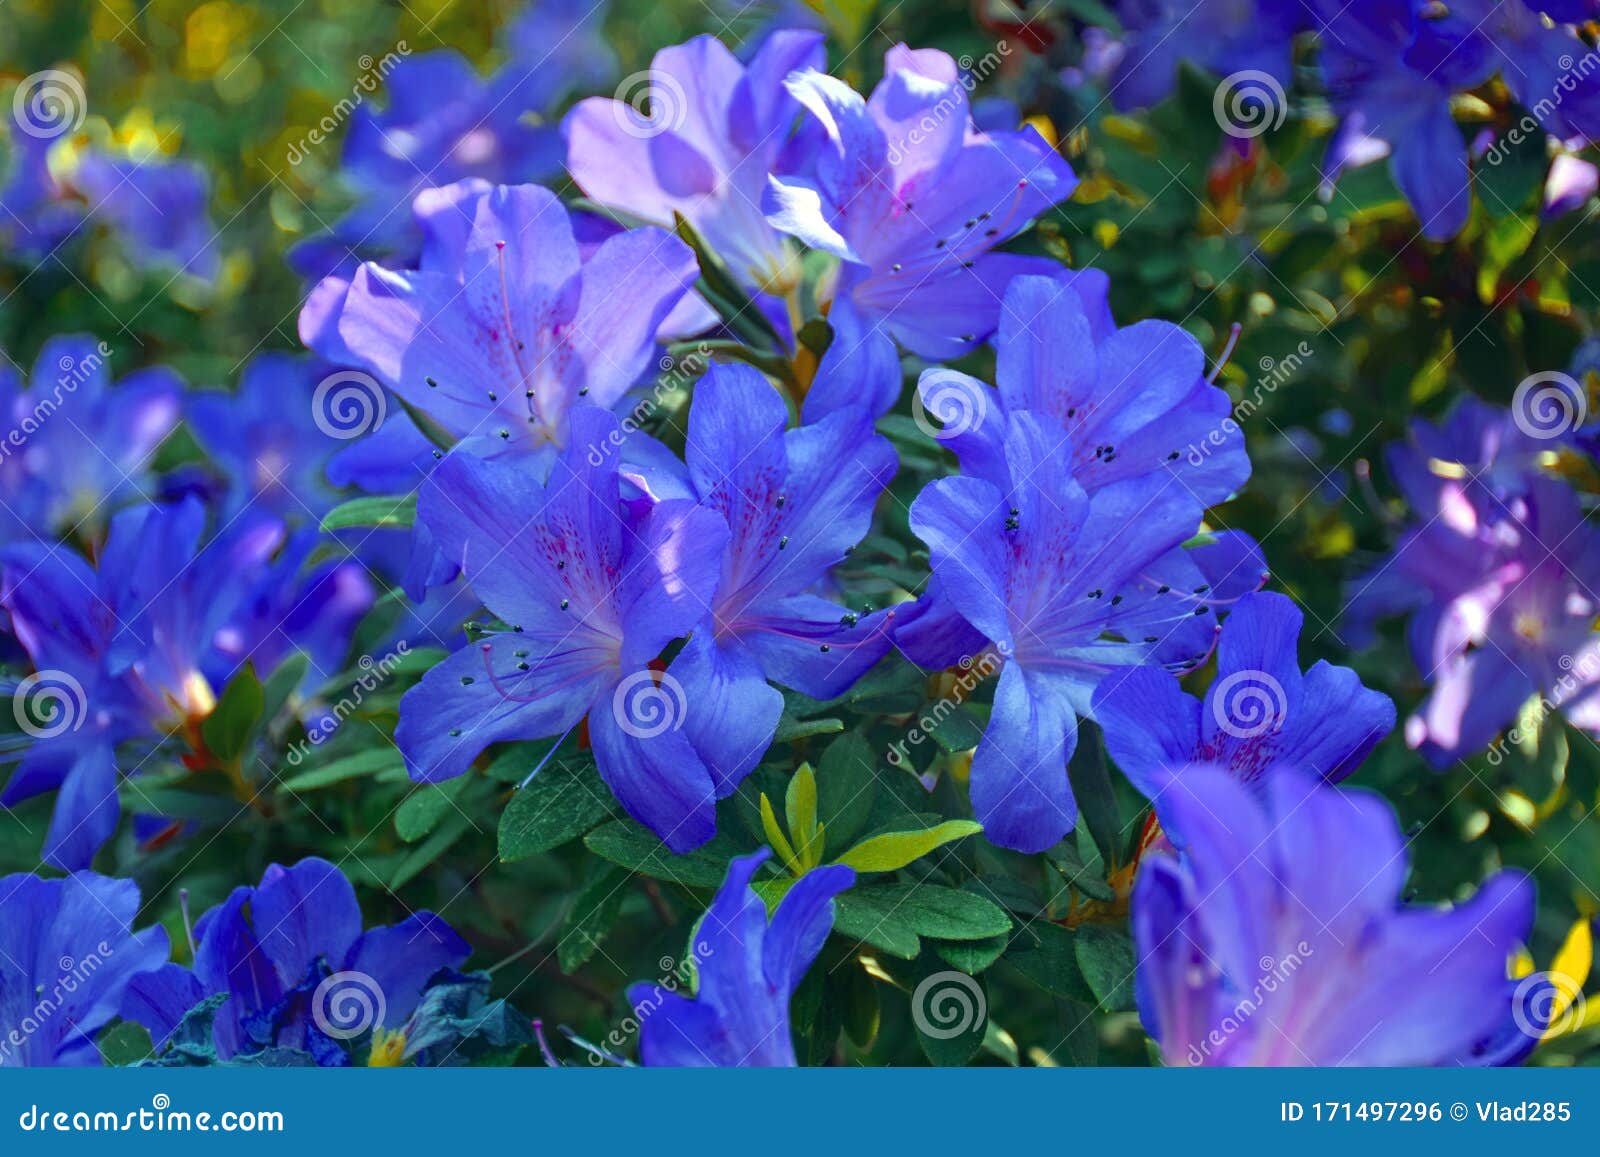 Flowering Purple Azaleas In The Winter Garden Stock Photo Image Of Decoration Fresh 171497296